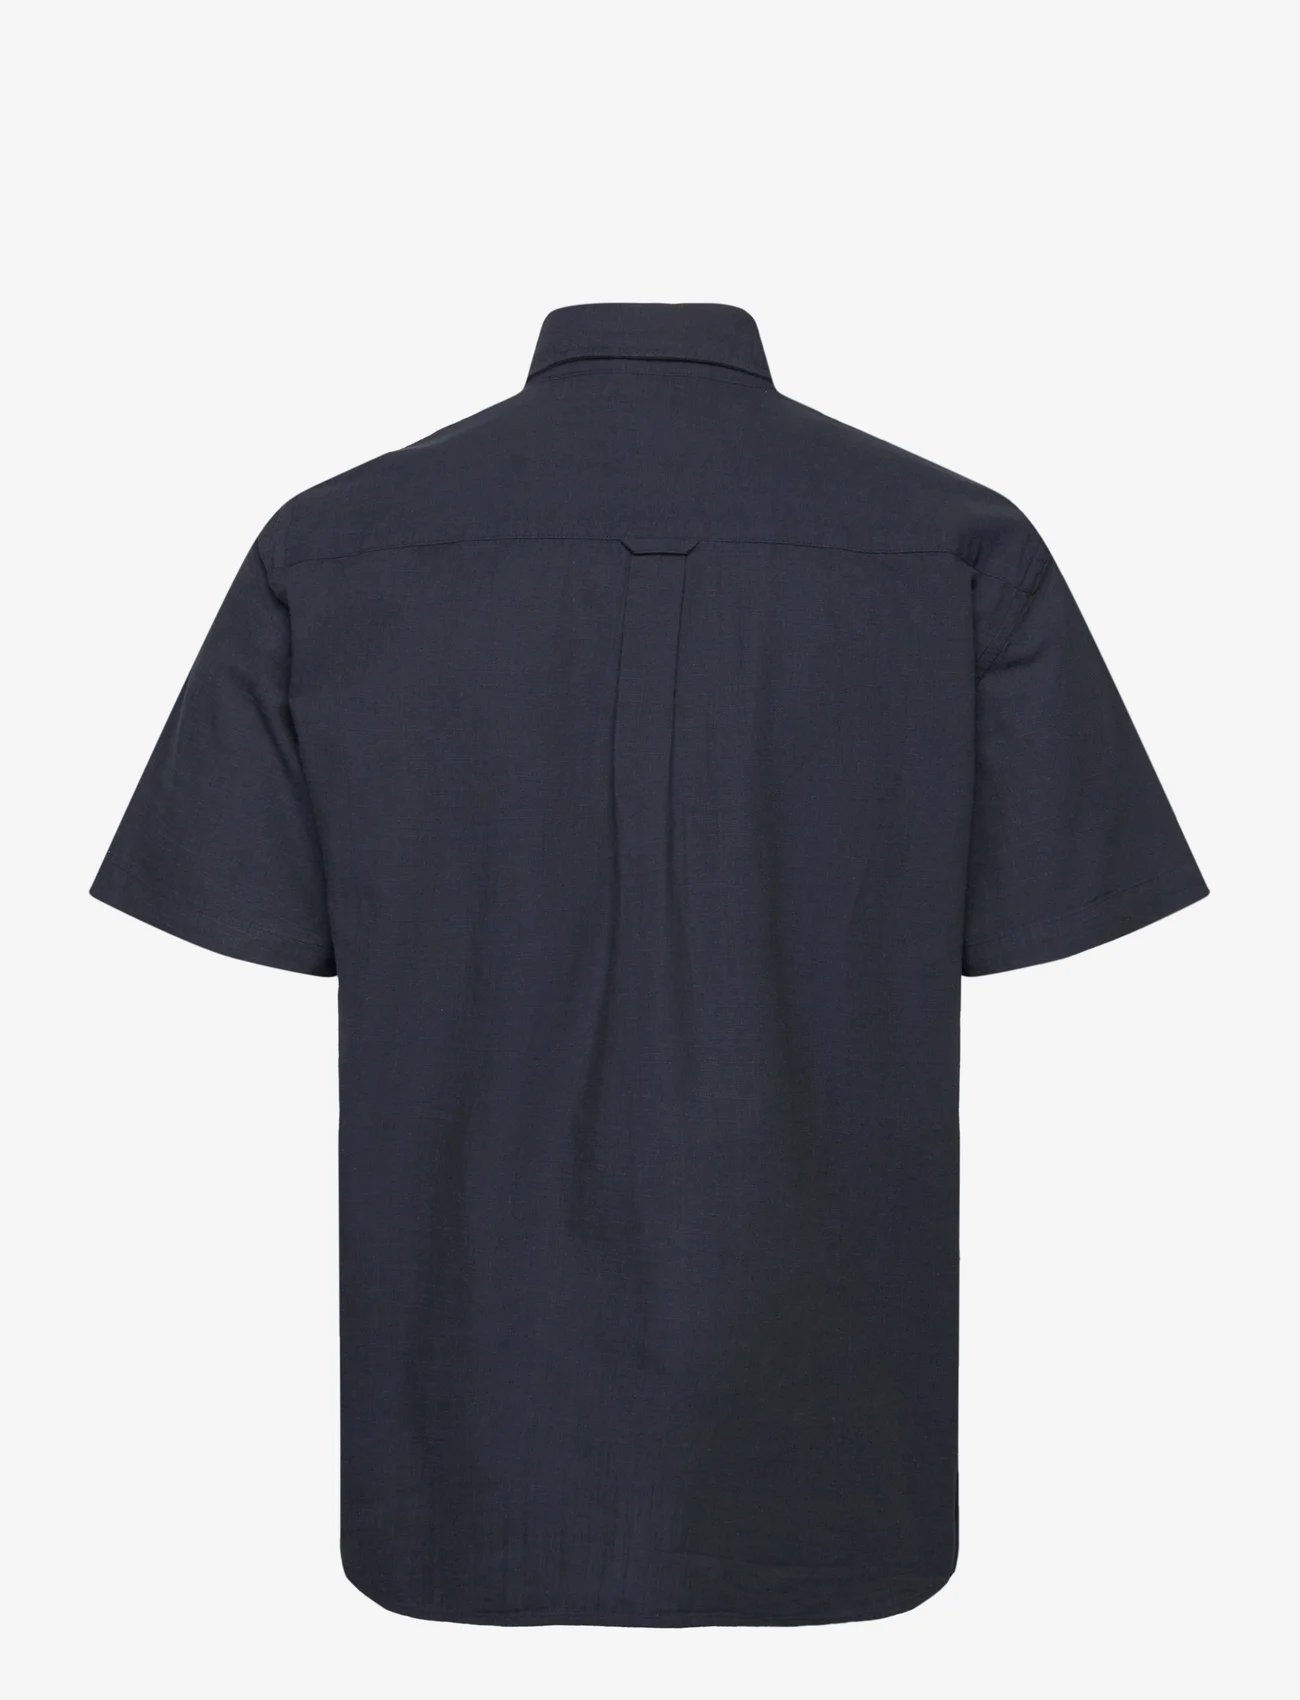 Knowledge Cotton Apparel - Regular linen look short sleeve shi - kurzärmelig - total eclipse - 1